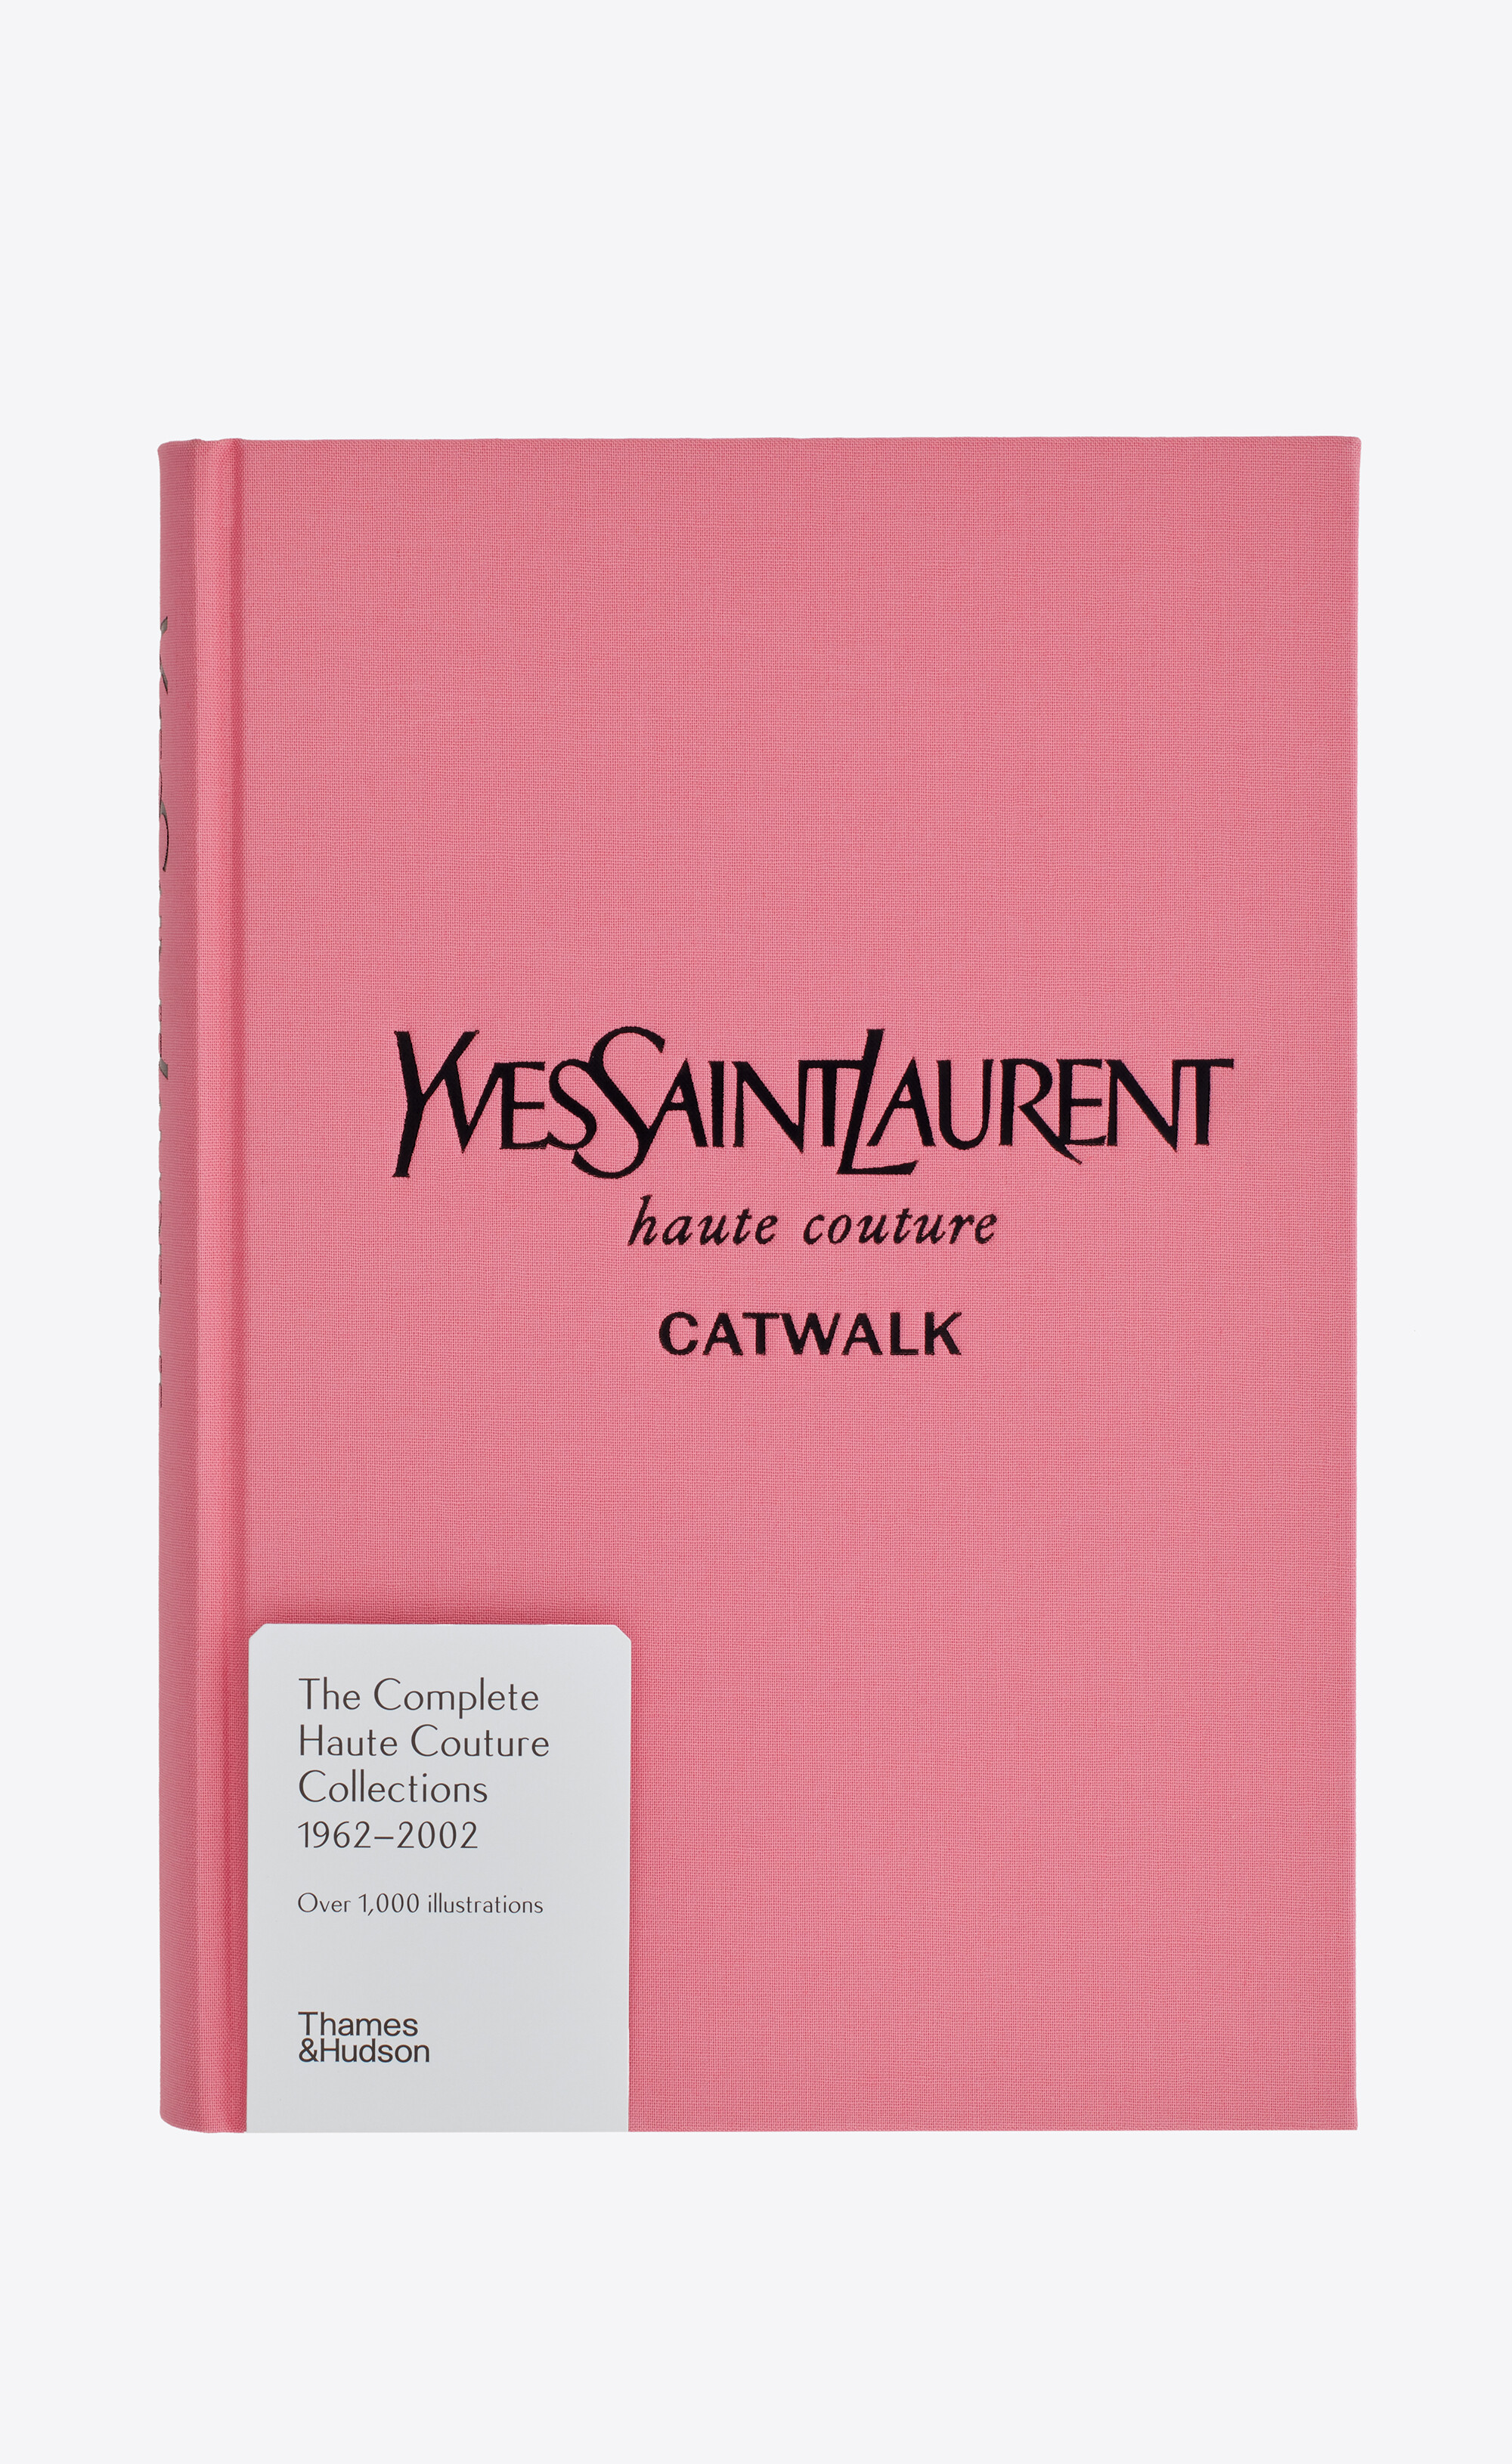 Yves Saint Laurent Catwalk: Haute Couture Collections 1962 - 2002